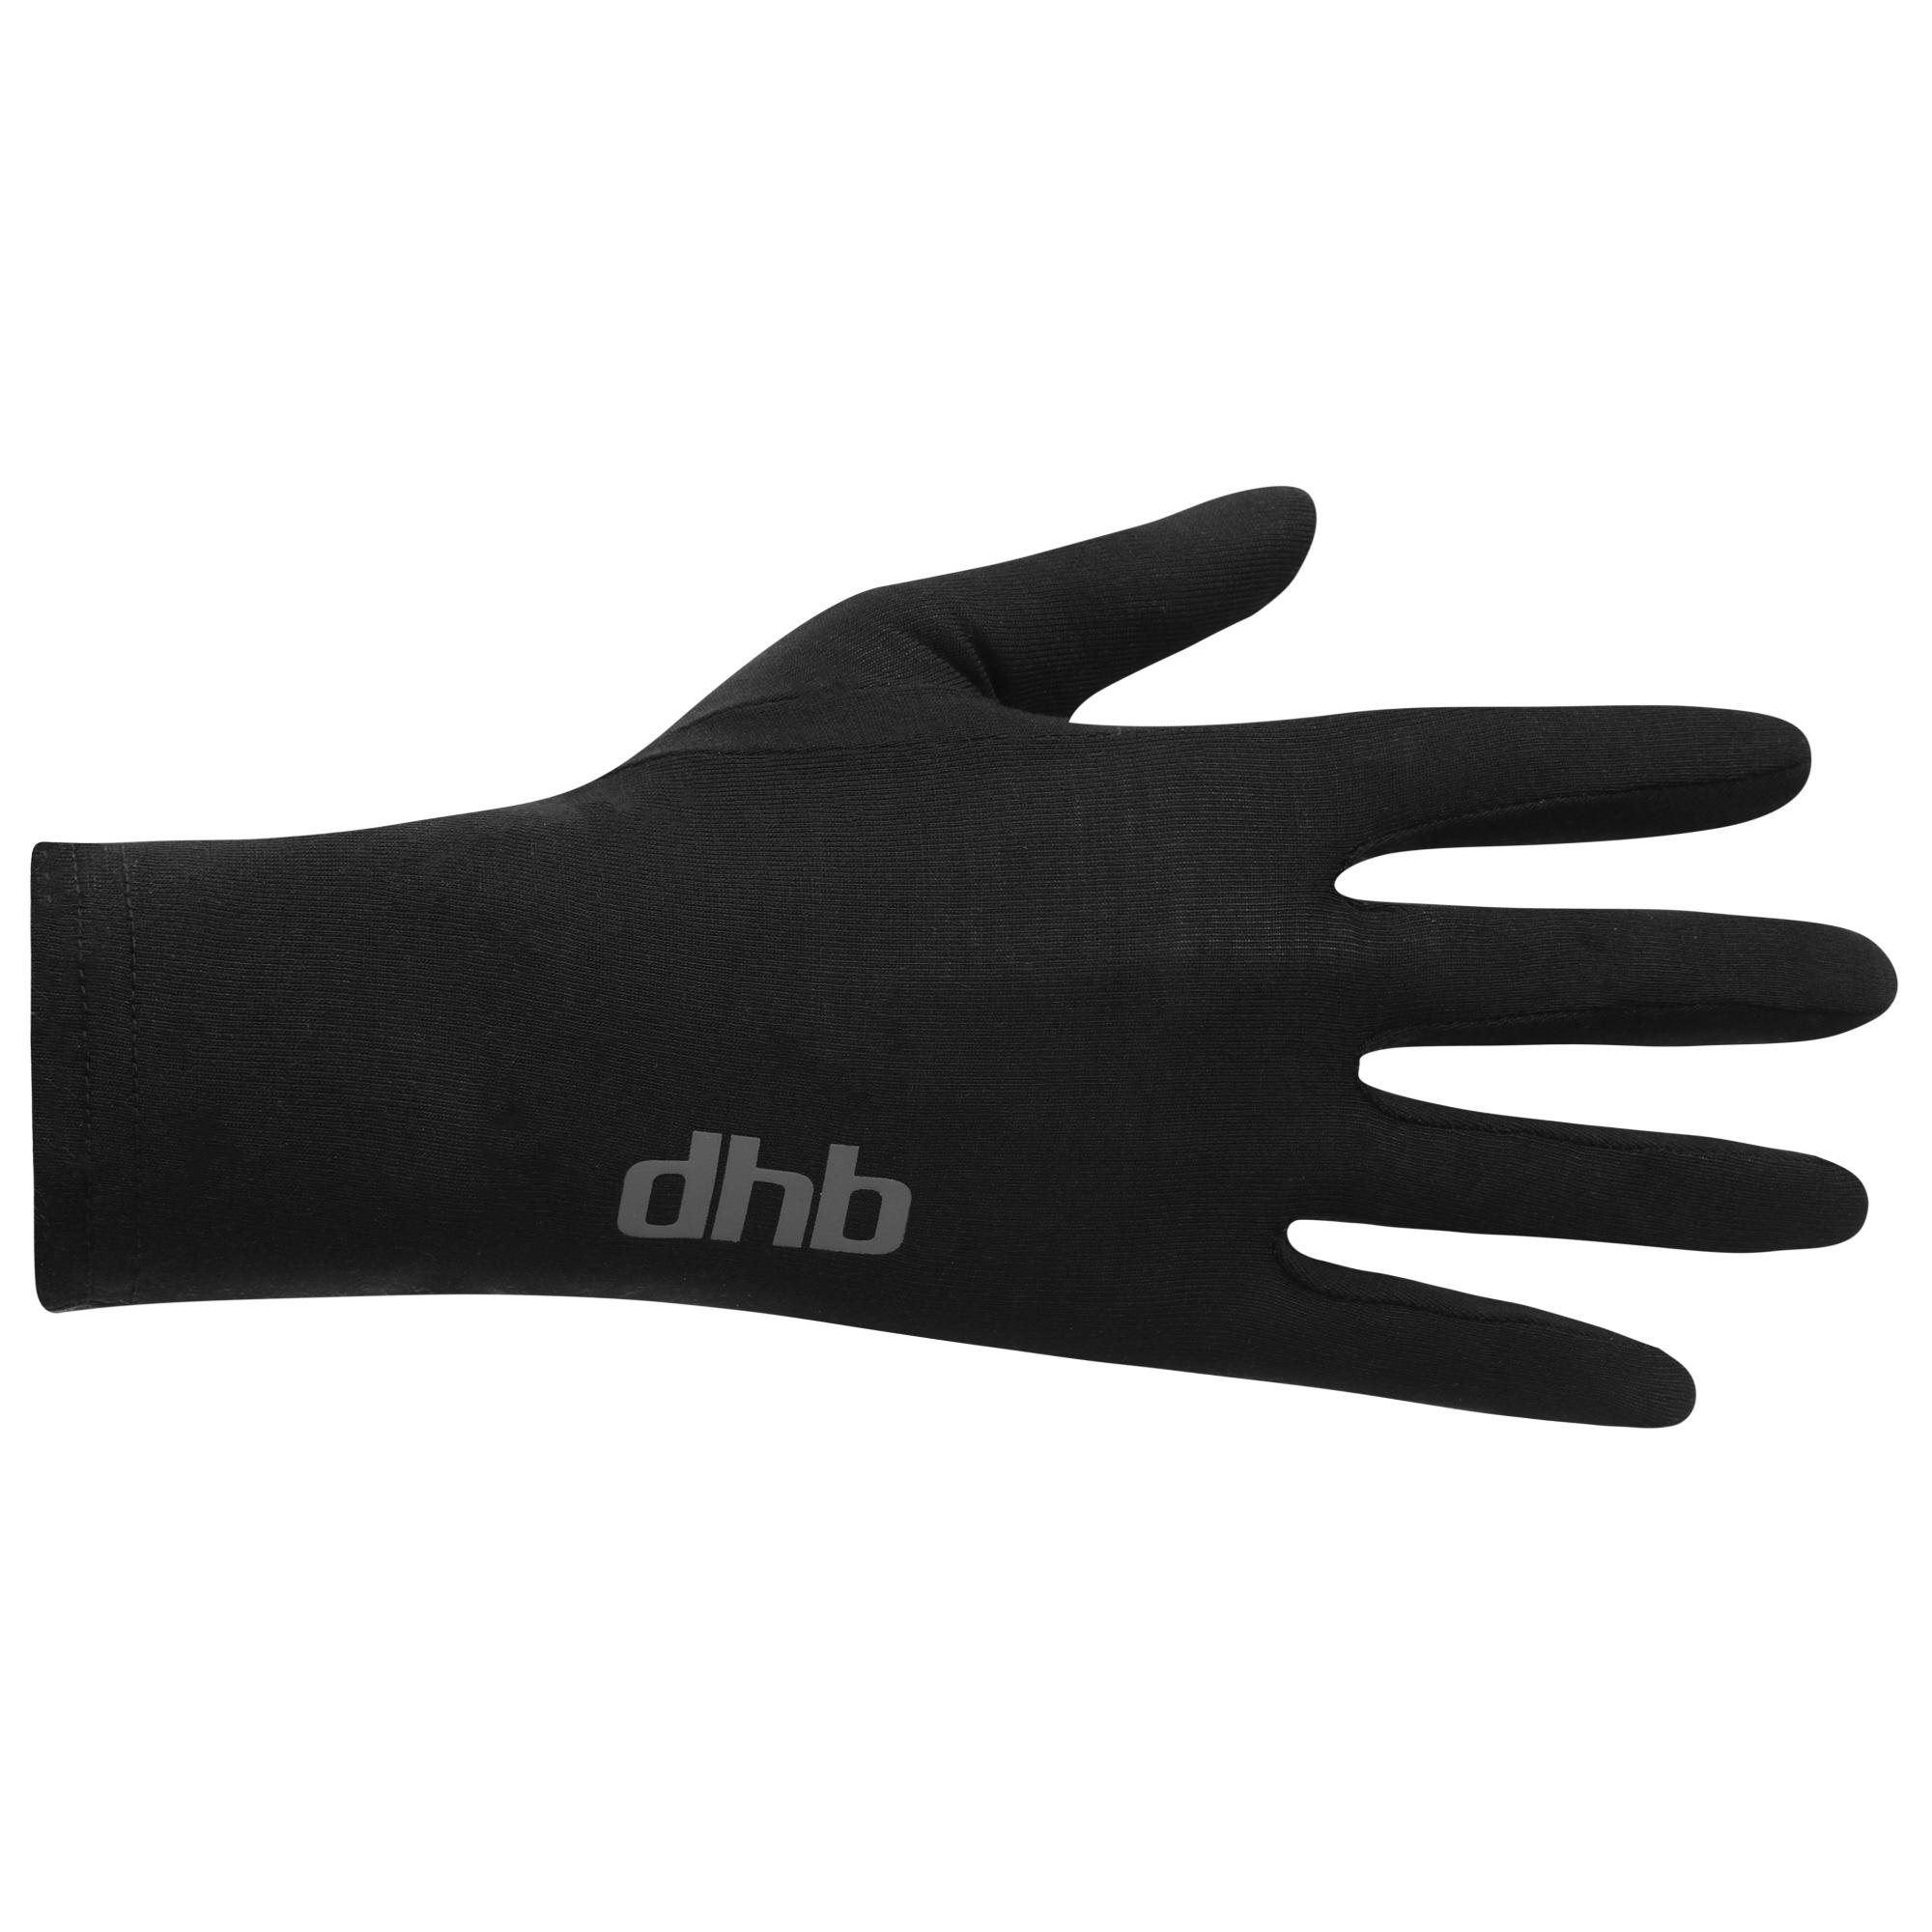 Dhb Merino Liner Glove - Black